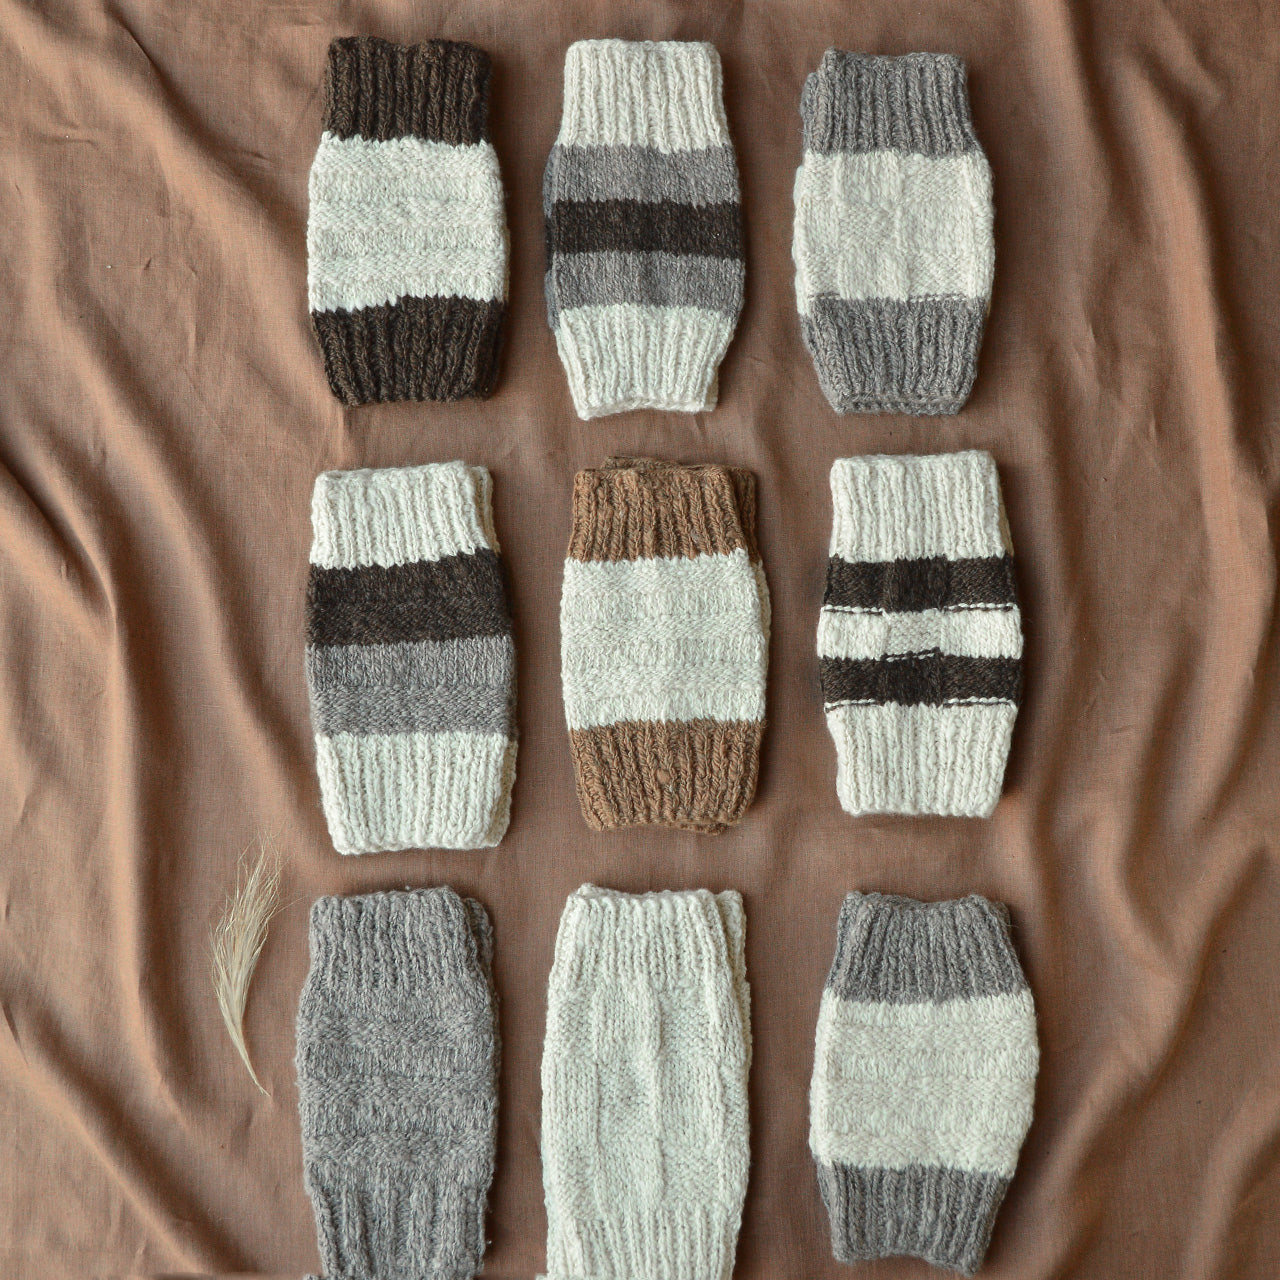 Enkhe's Hand Spun & Knitted Legwarmers 100% Mongolian Sheep Wool